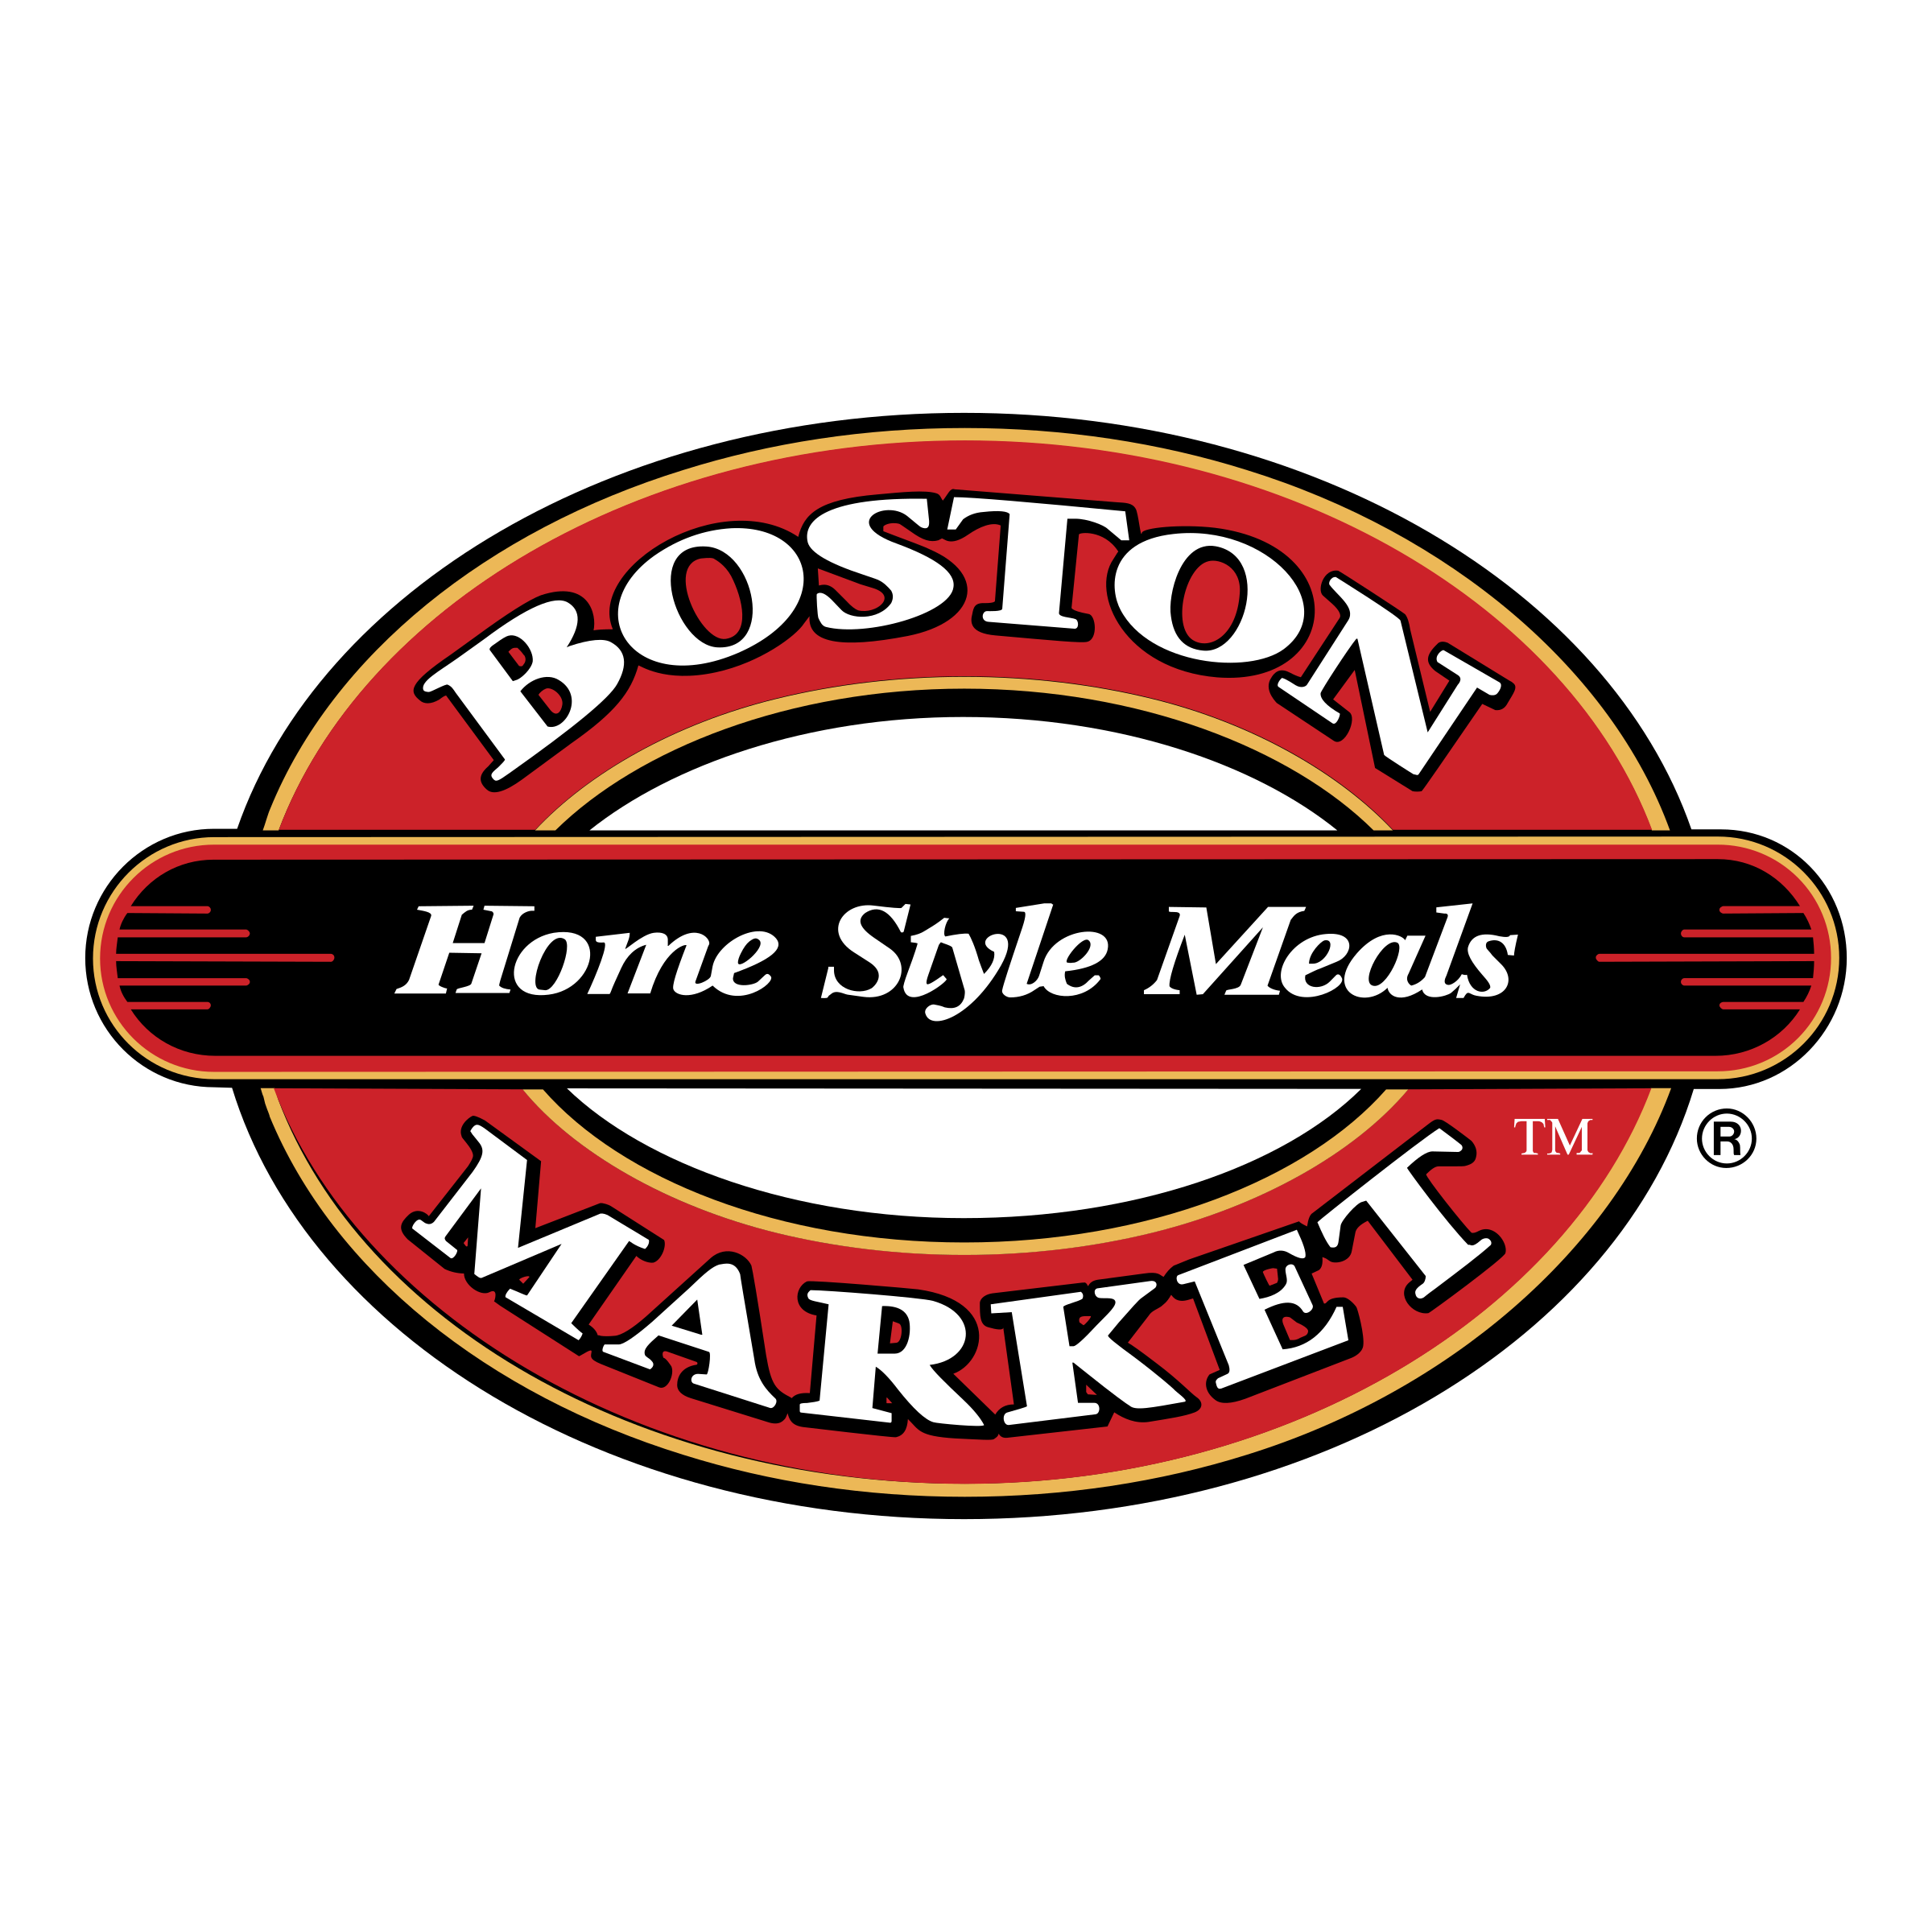 https://activemenus.com/wp-content/uploads/2021/09/boston-market-2-logo-png-transparent.png